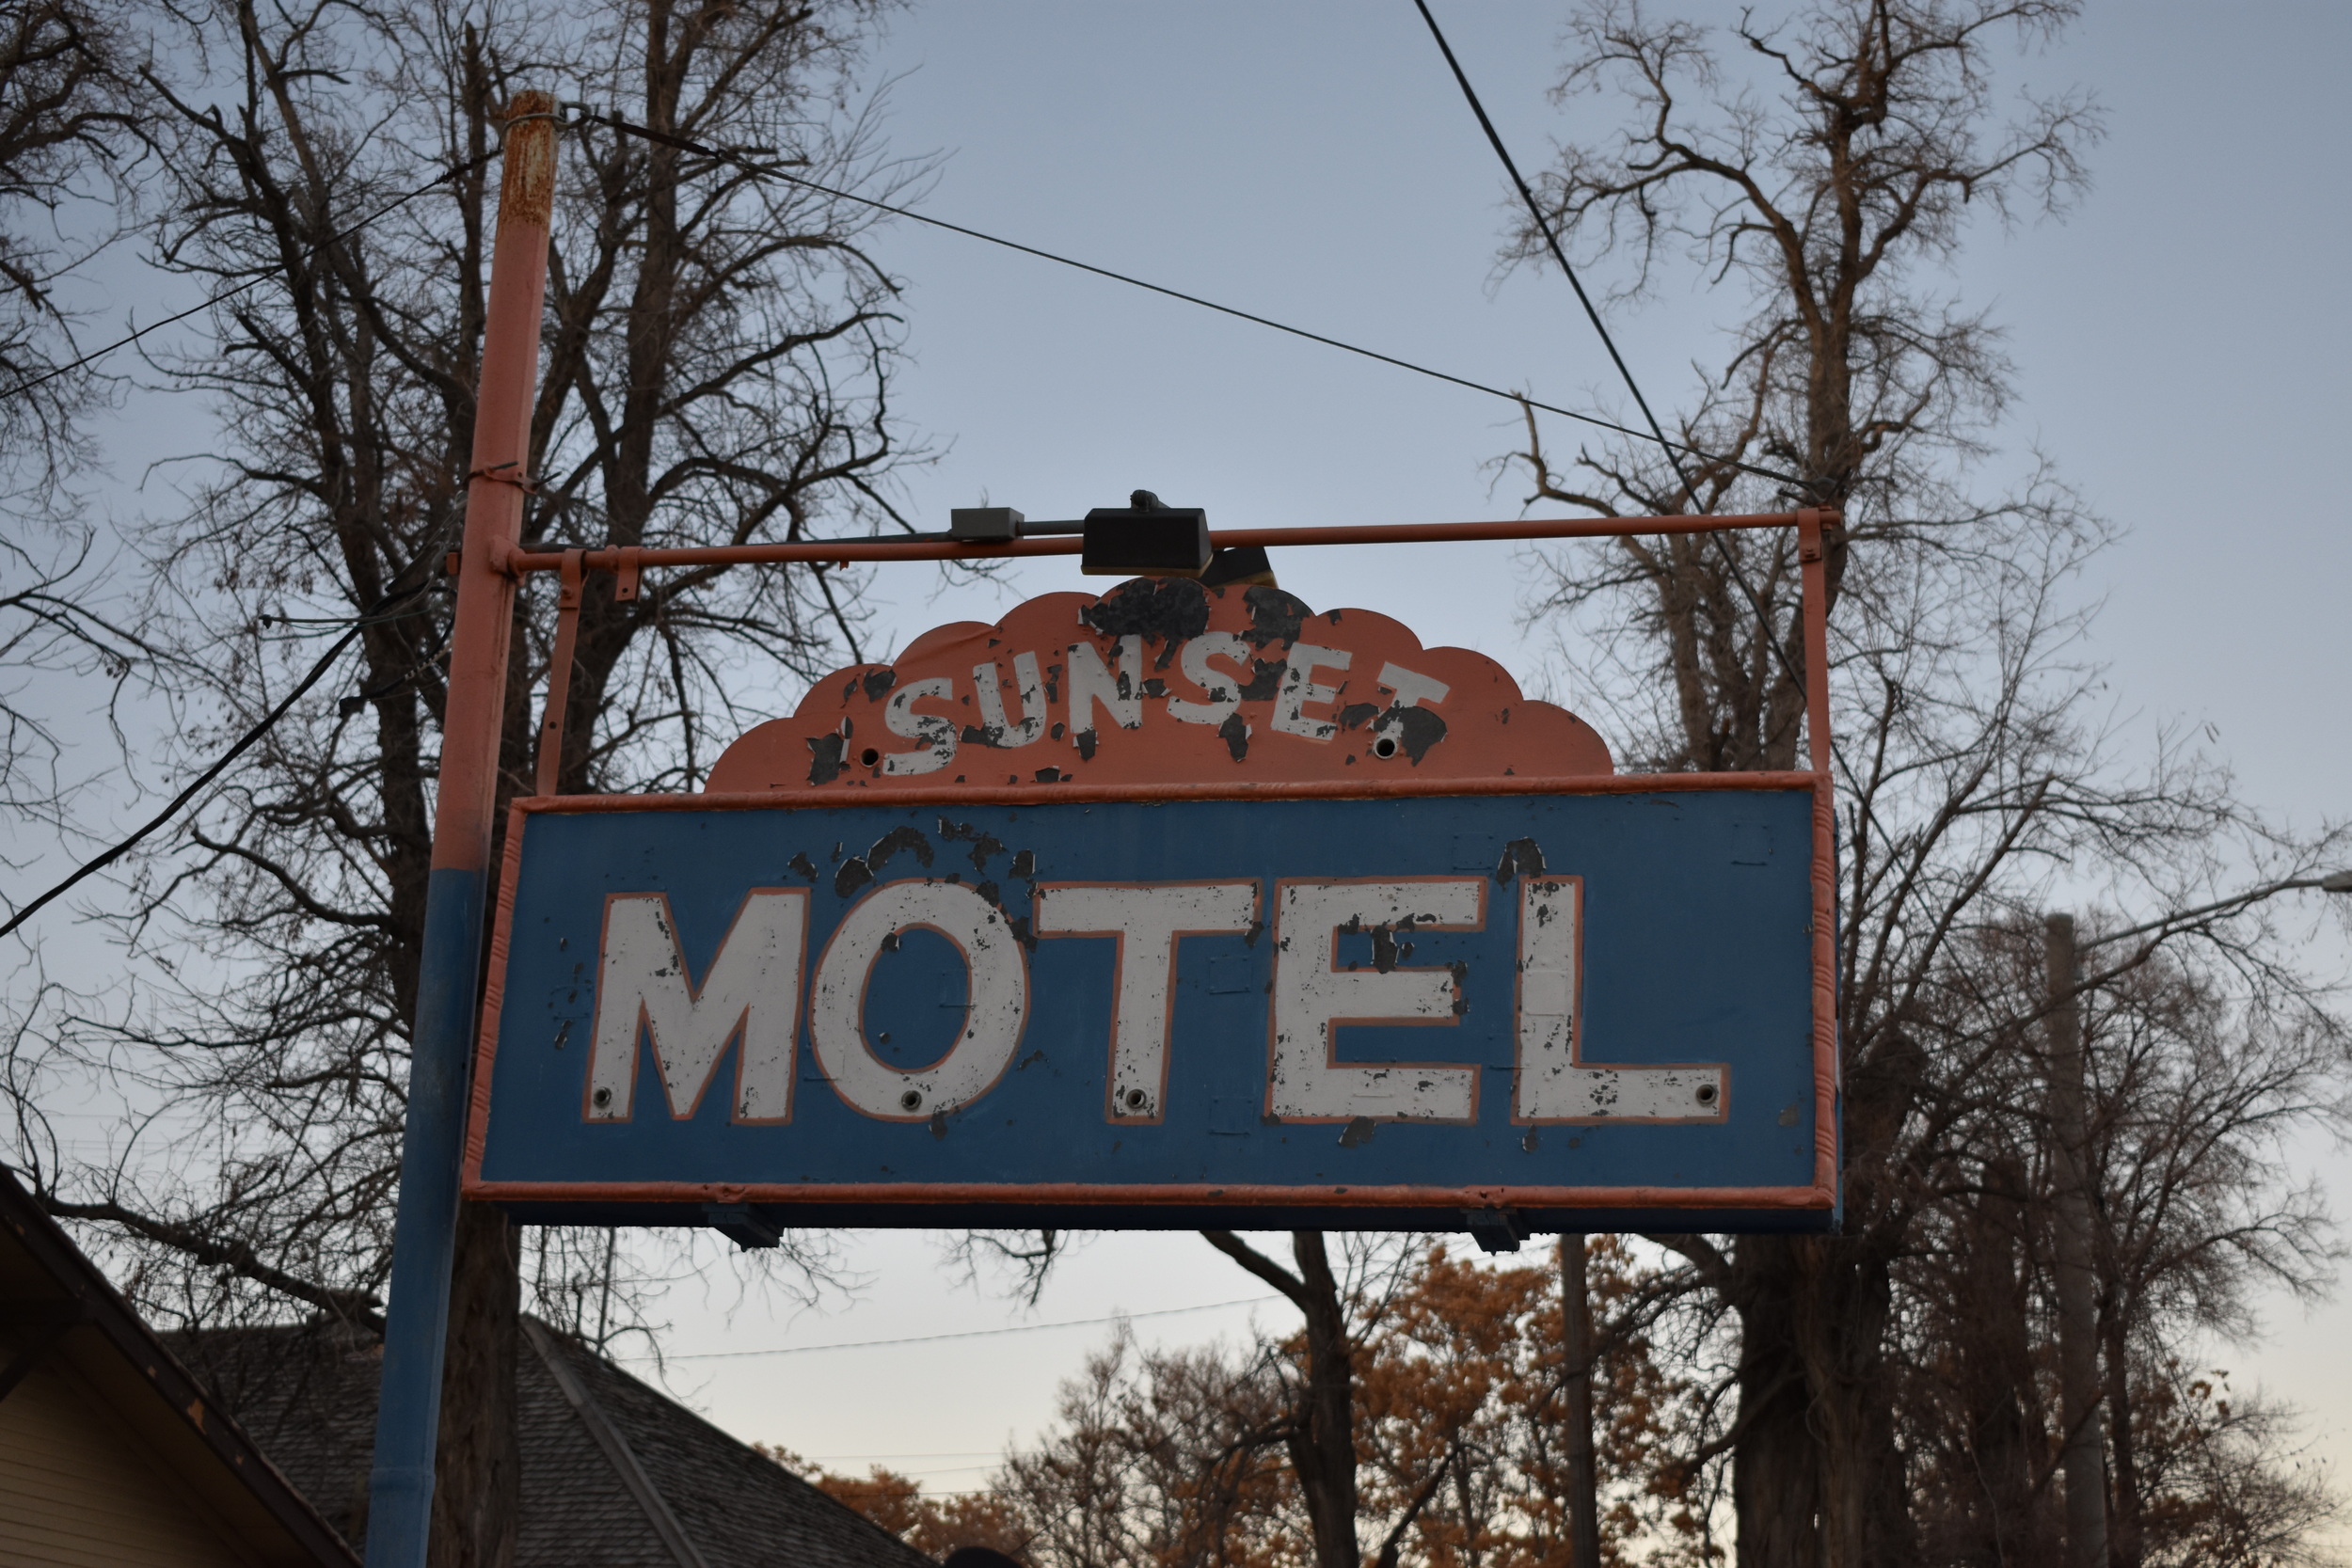 Sunset Motel flag mounted sign, Lovelock, Nevada